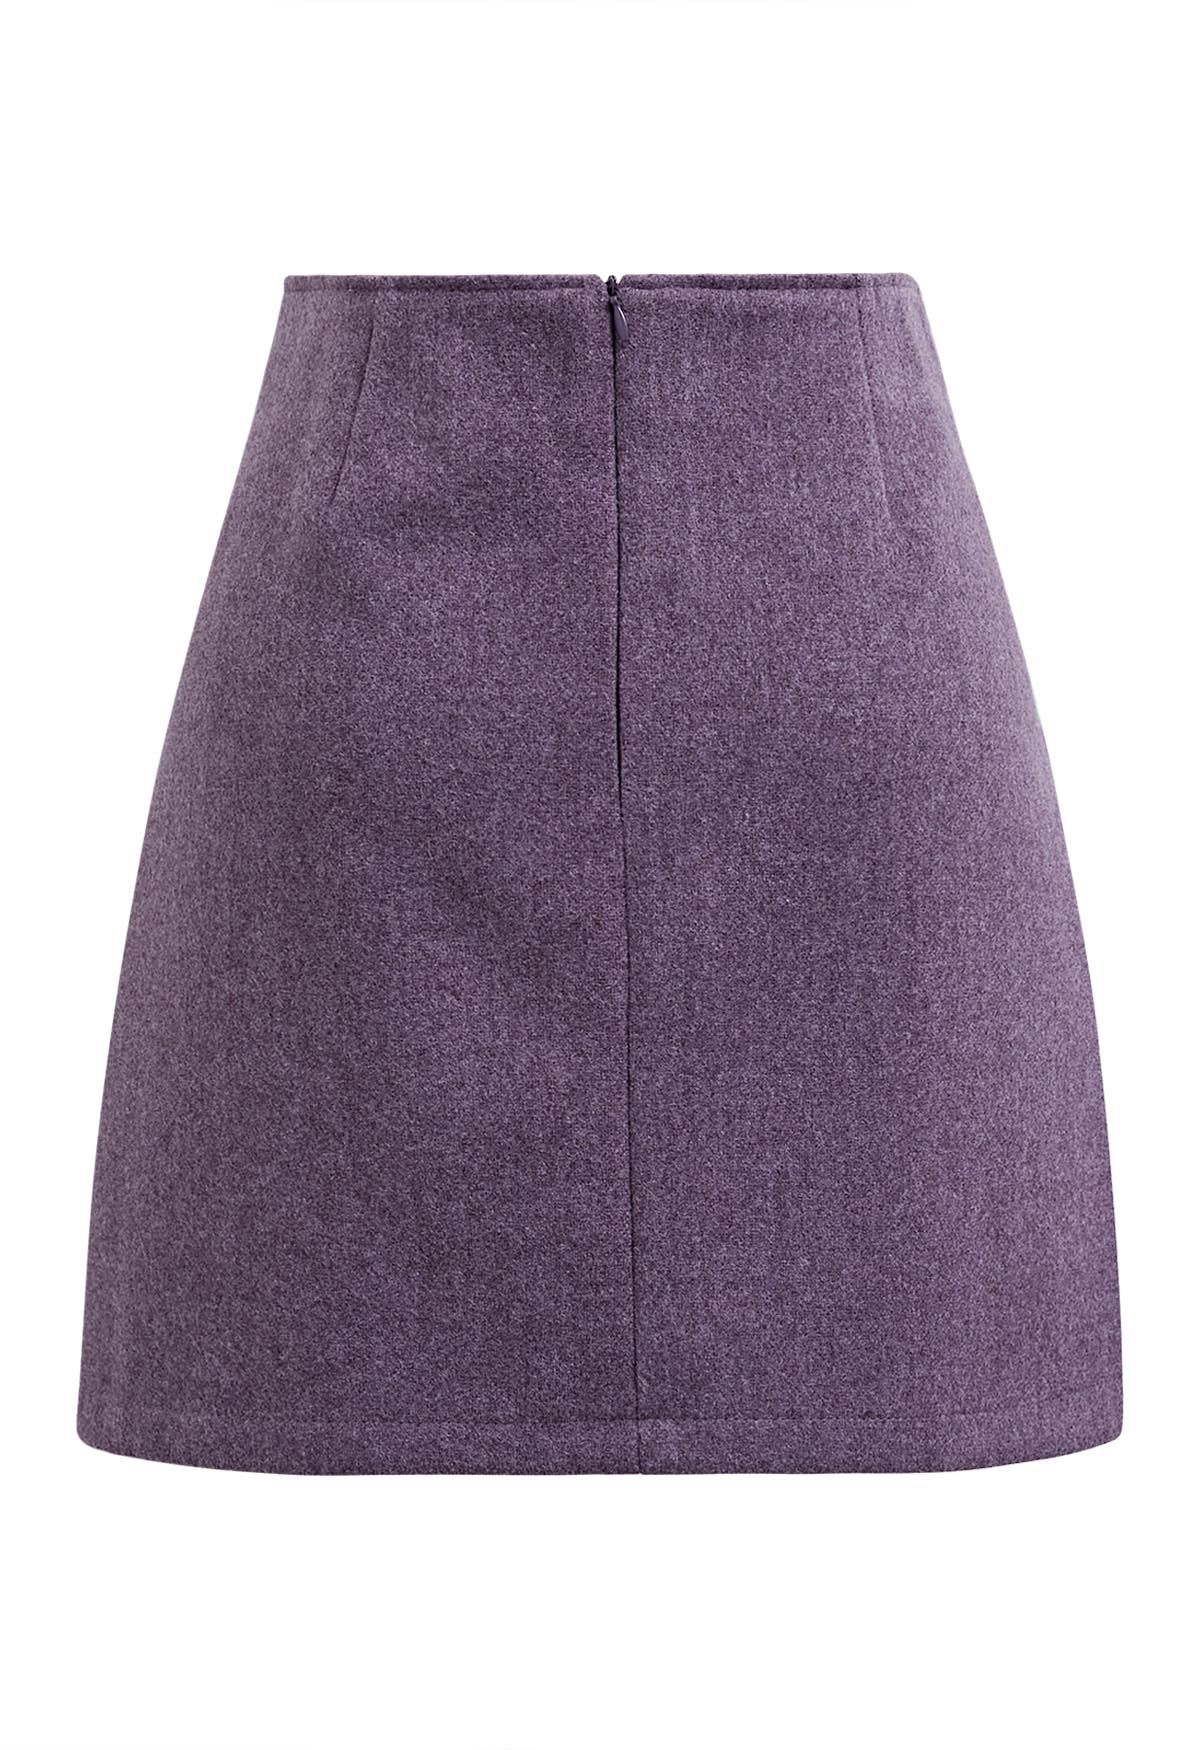 Elegante minifalda con costura central